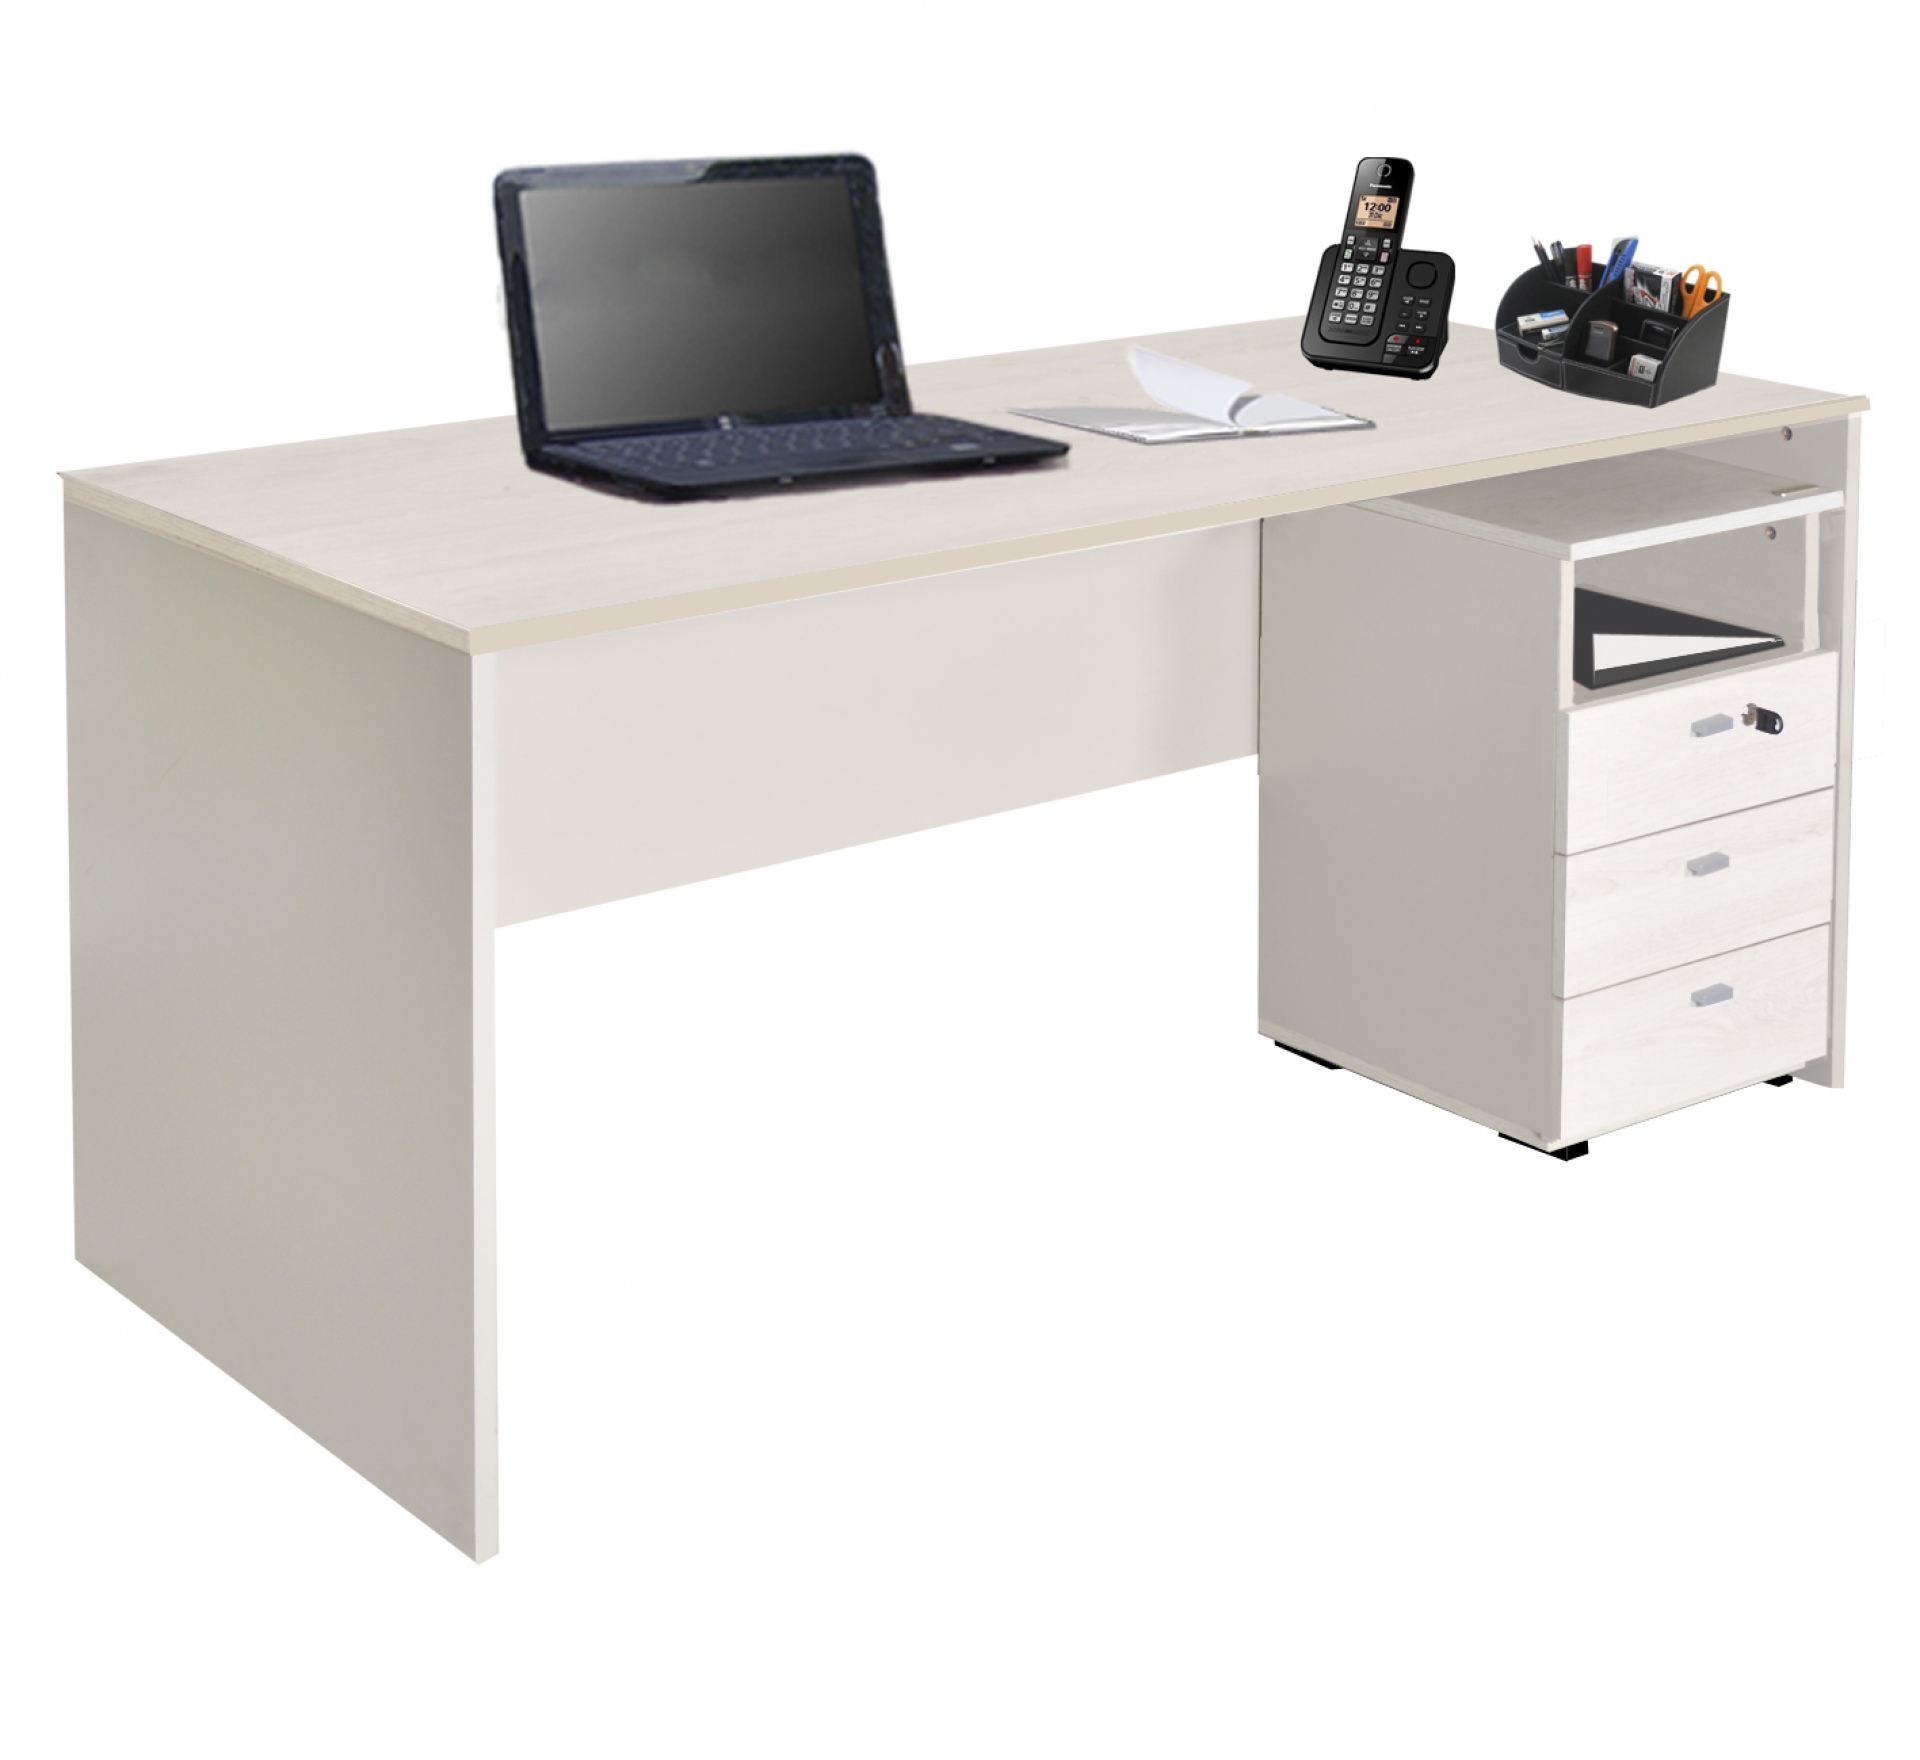 503-escritorio-1-50m-1591992597.jpg